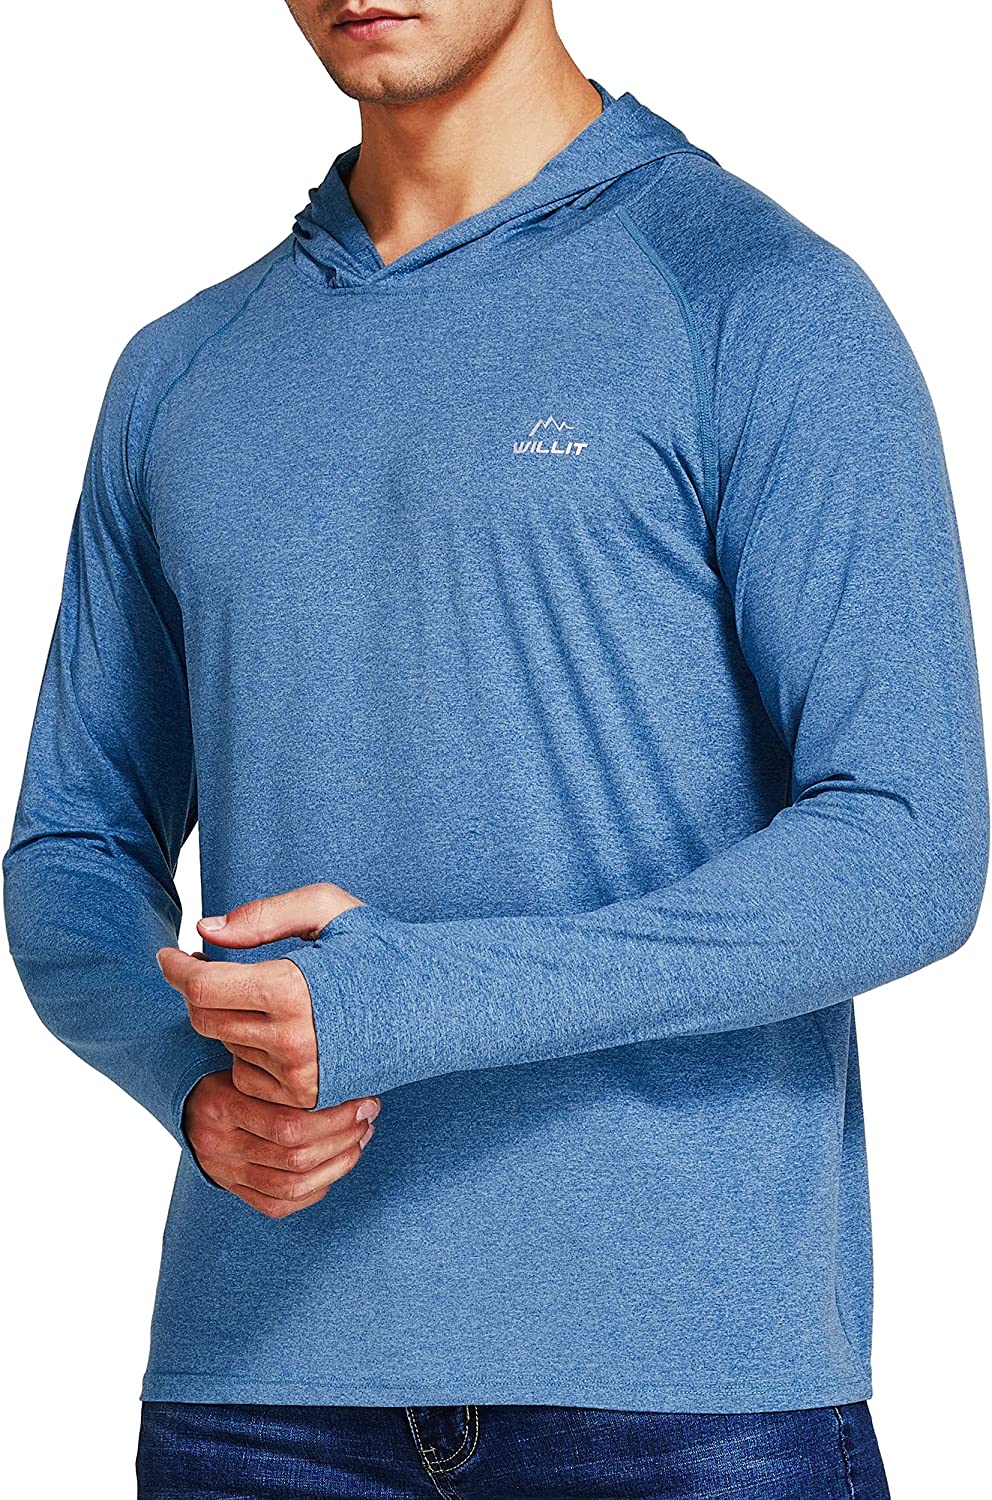 Sun Protection Hoodie Shirt Long Sleeve SPF Fishing Outdoor UV Shirt Hiking Lightweight Willit Men's UPF 50 